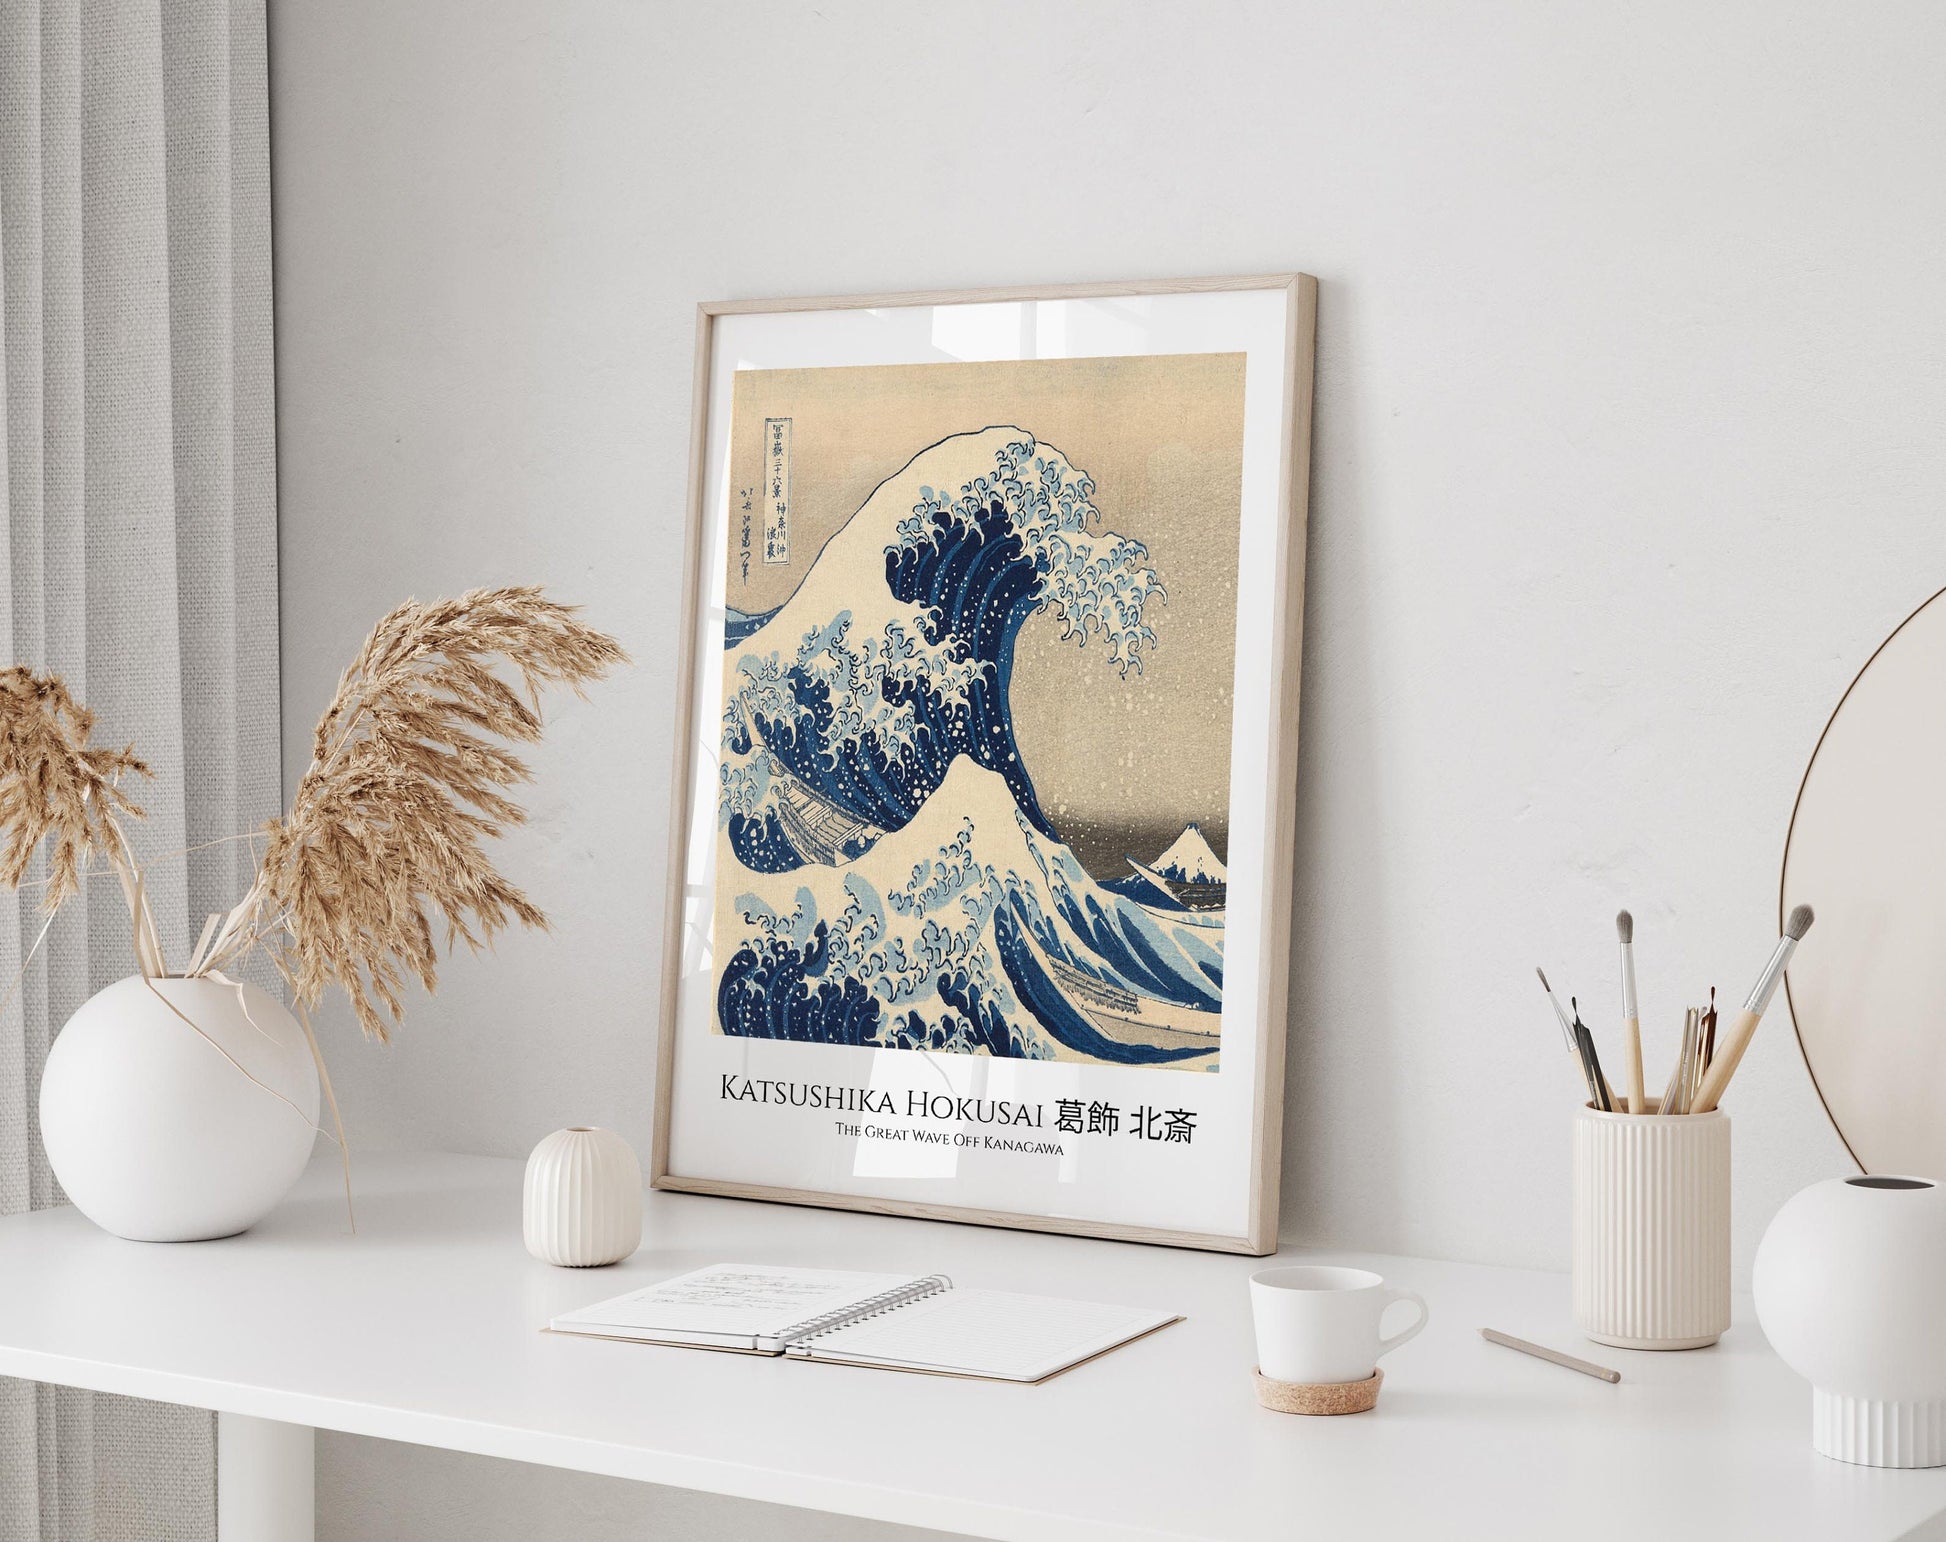 Japanese Framed Art Prints, A set of Katsushika Hokusai Posters, Wooden Oak Hanger Frame, Woodblock art prints, The Great Wave Off Kanagawa